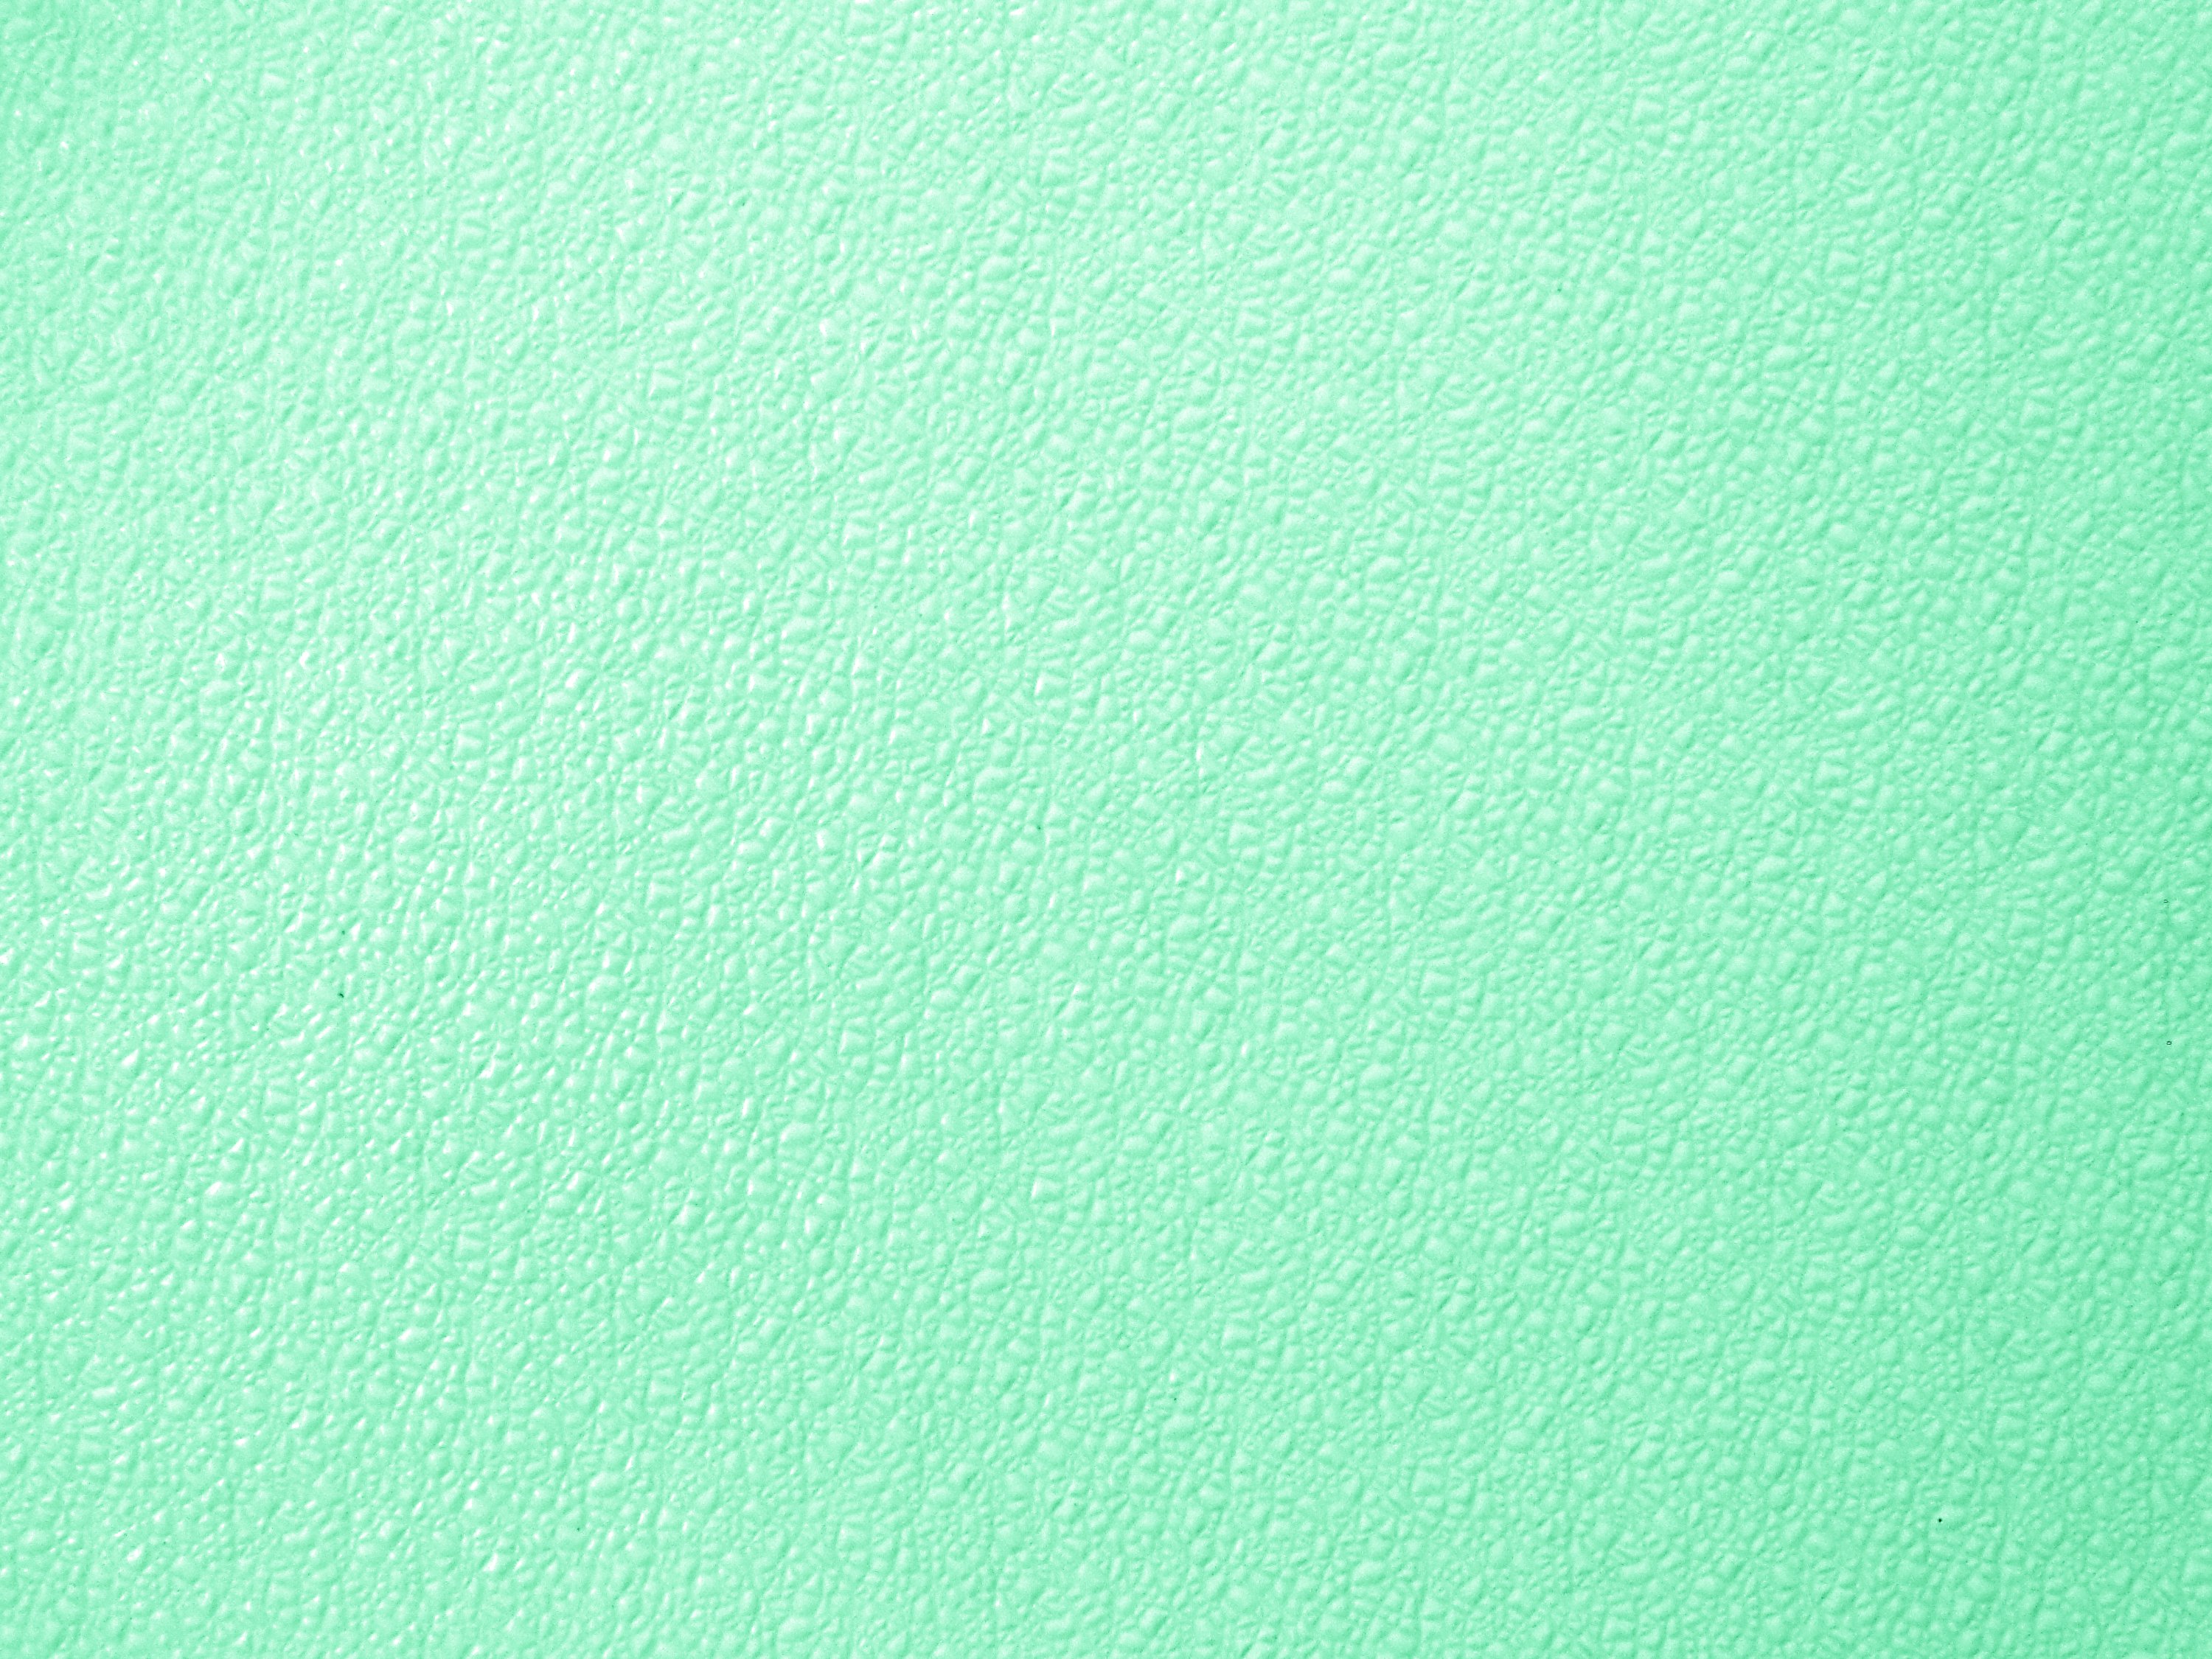 Mint Green And Pink Wallpaper Wallpapersafari